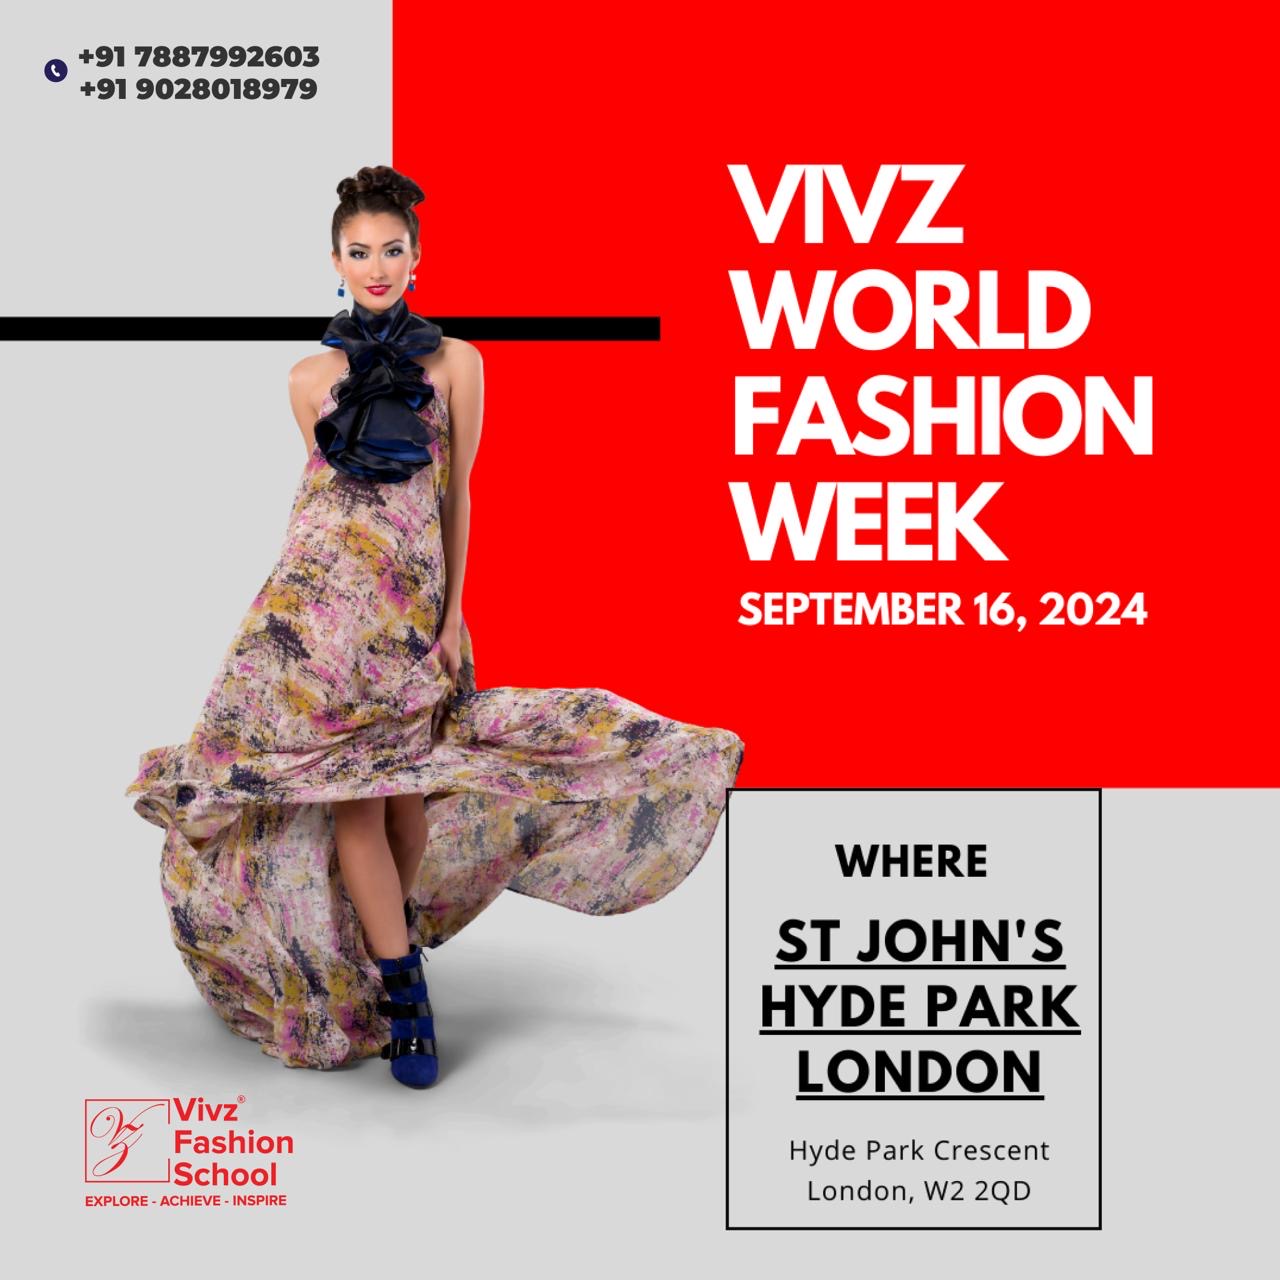 Vivz World Fashion Week